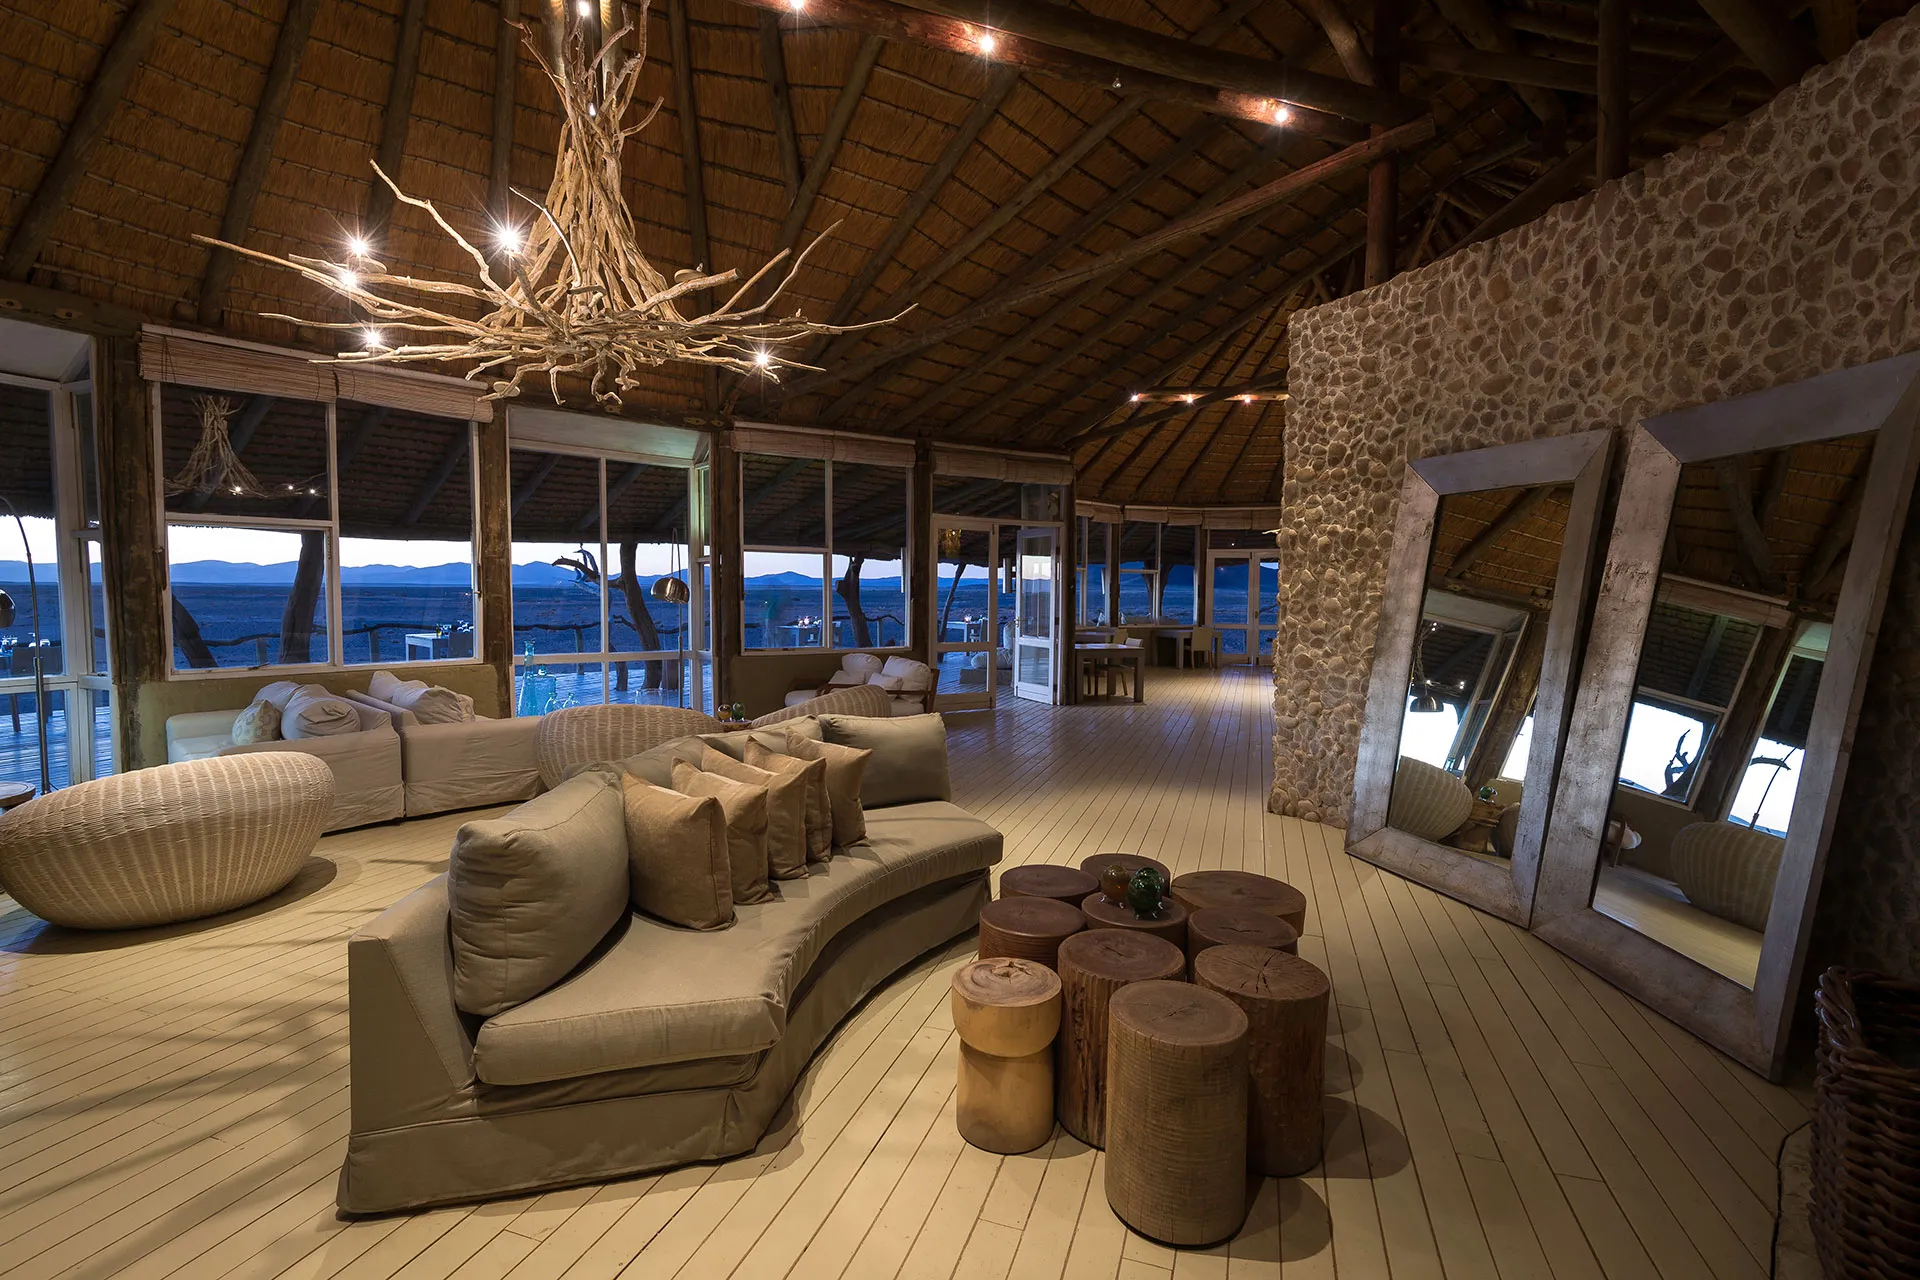 Luxuriös gestaltete Lounge mit Naturmaterialien